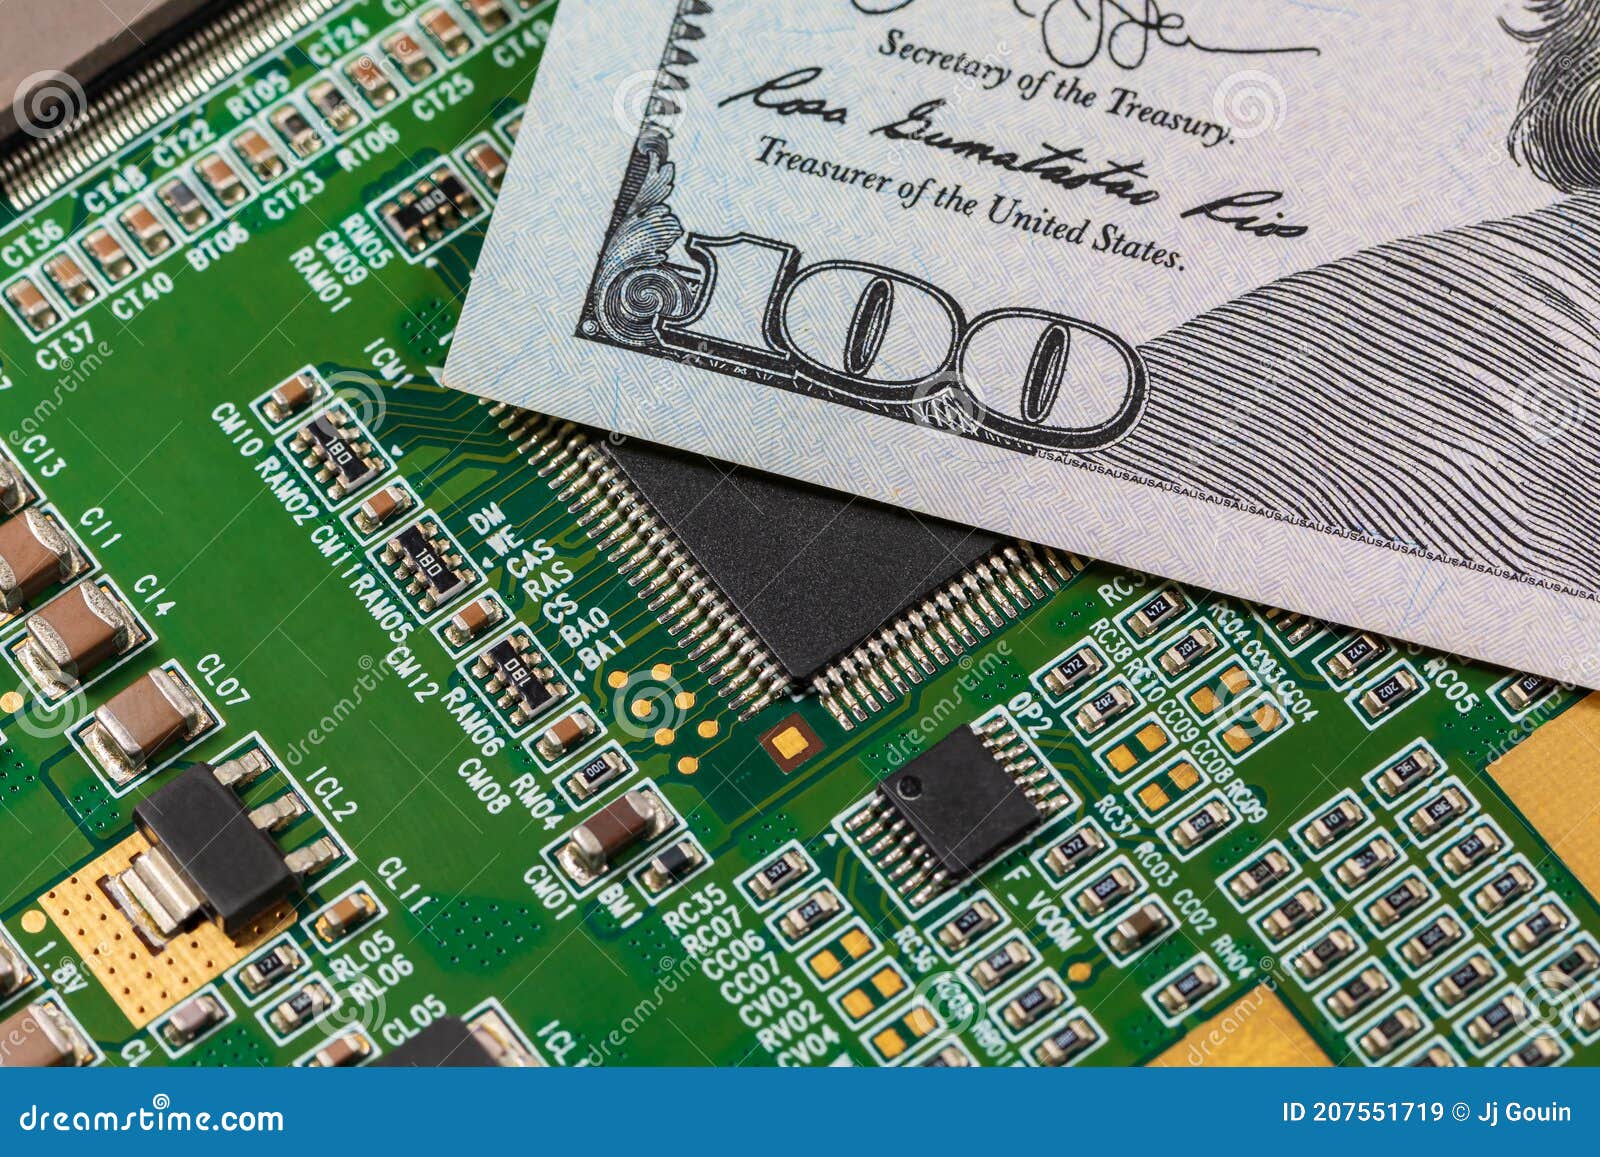 closeup of semiconductor circuit board and 100 dollar bill